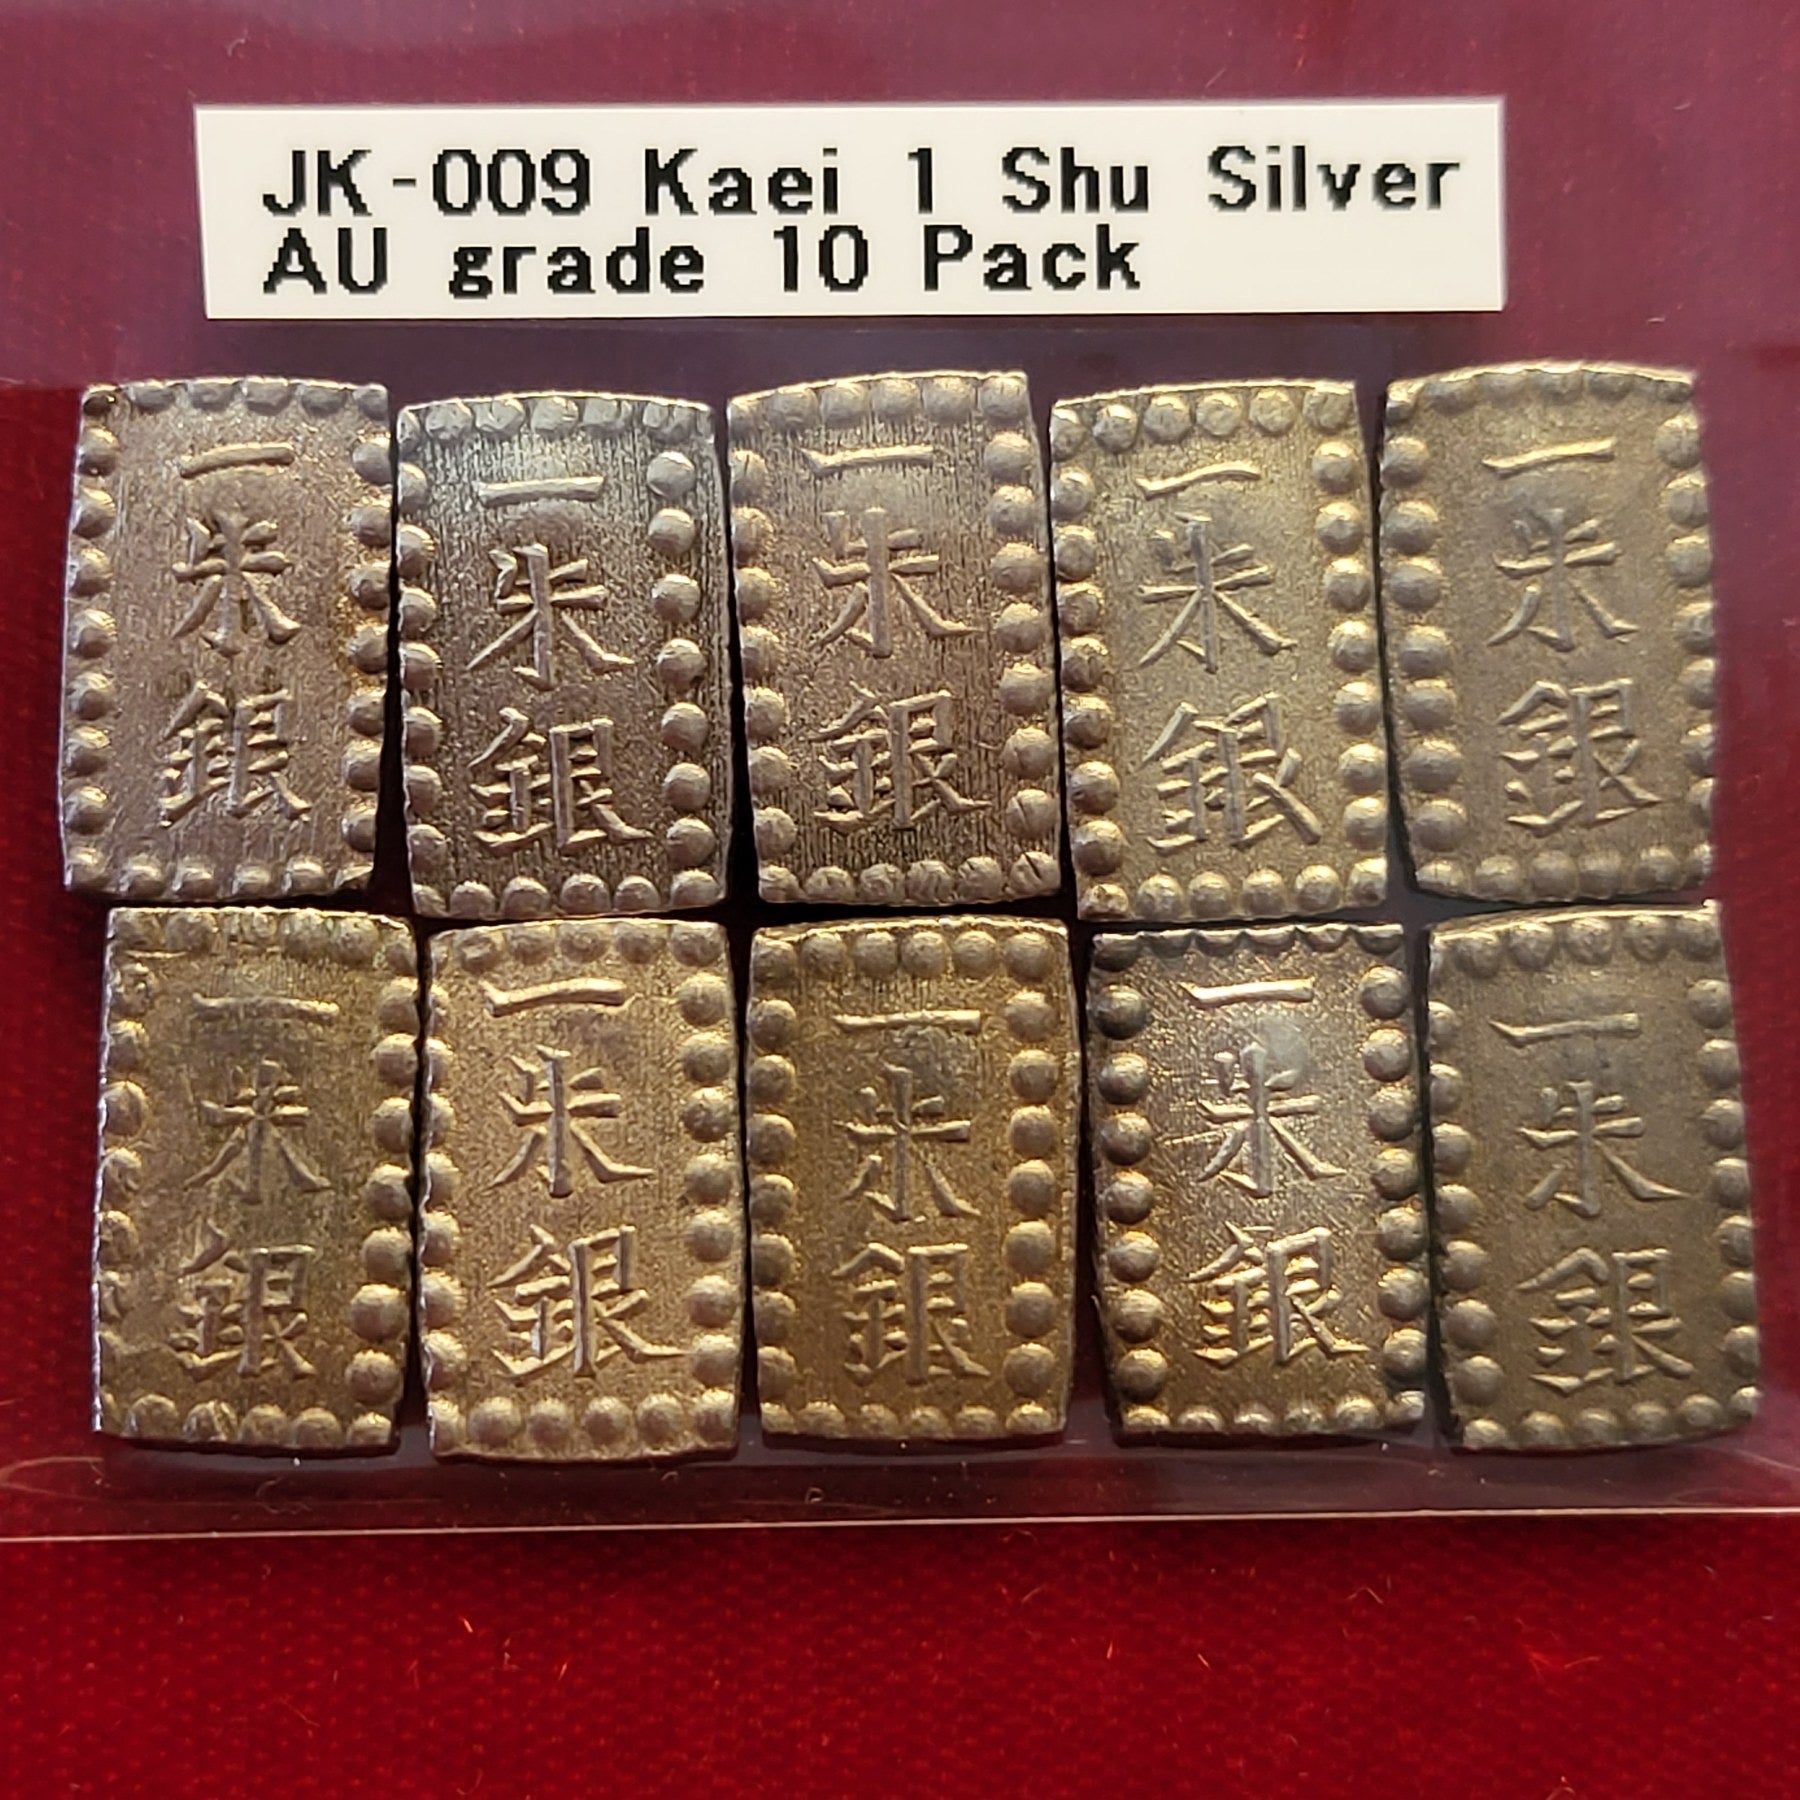 Kaei 1 Shu Silver AU grade 10 Pack